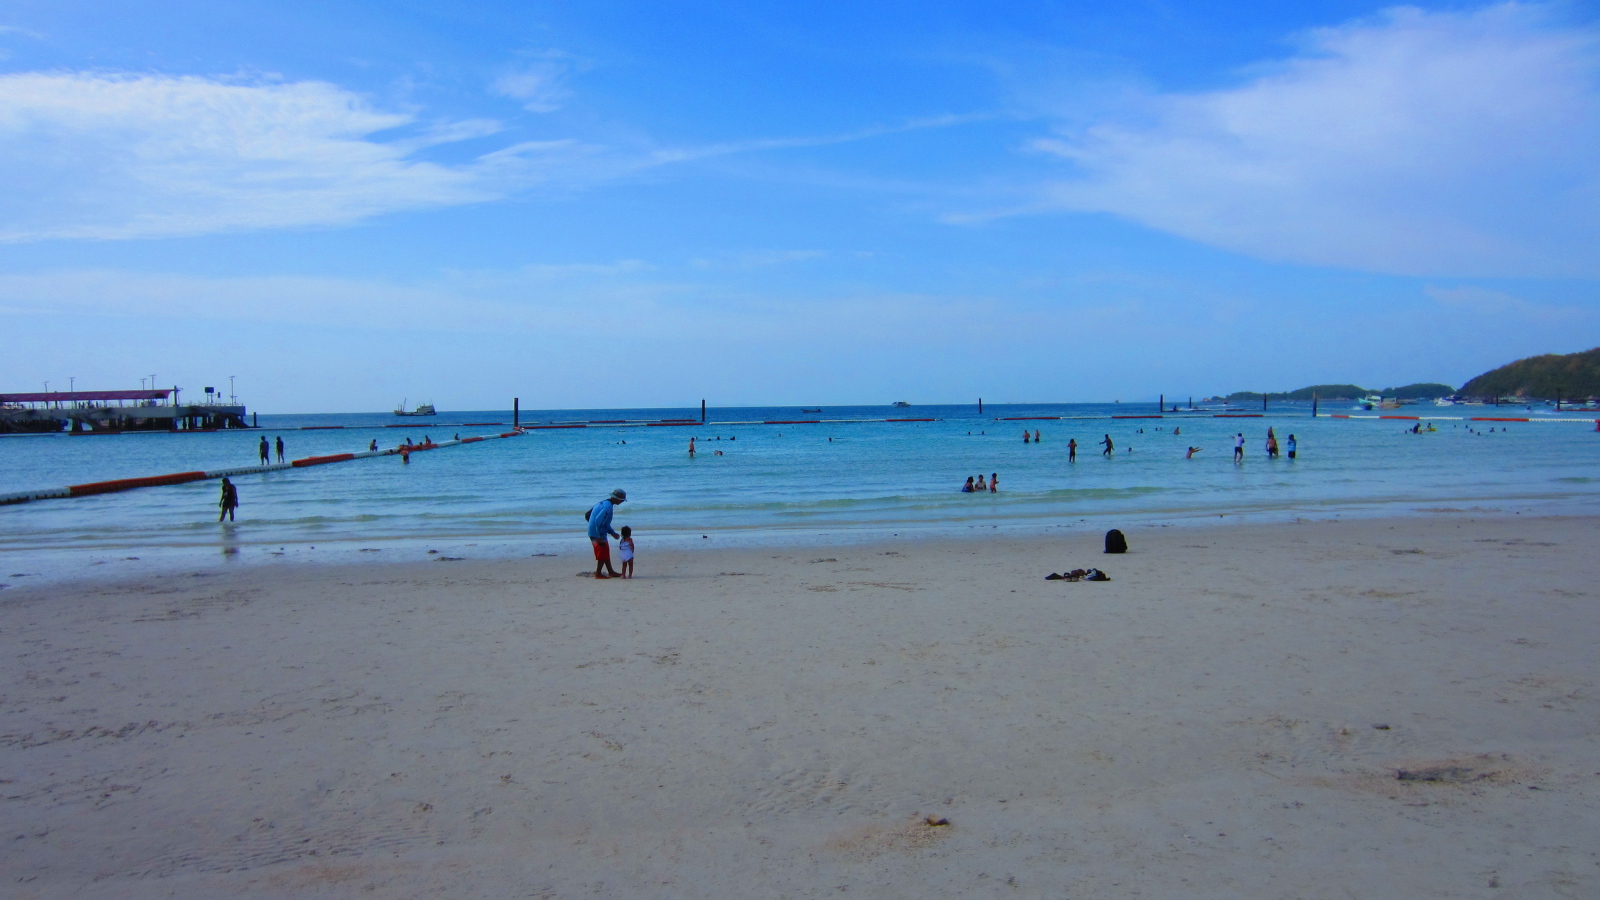 The beach on the resort island of Koh Larn, Thailand